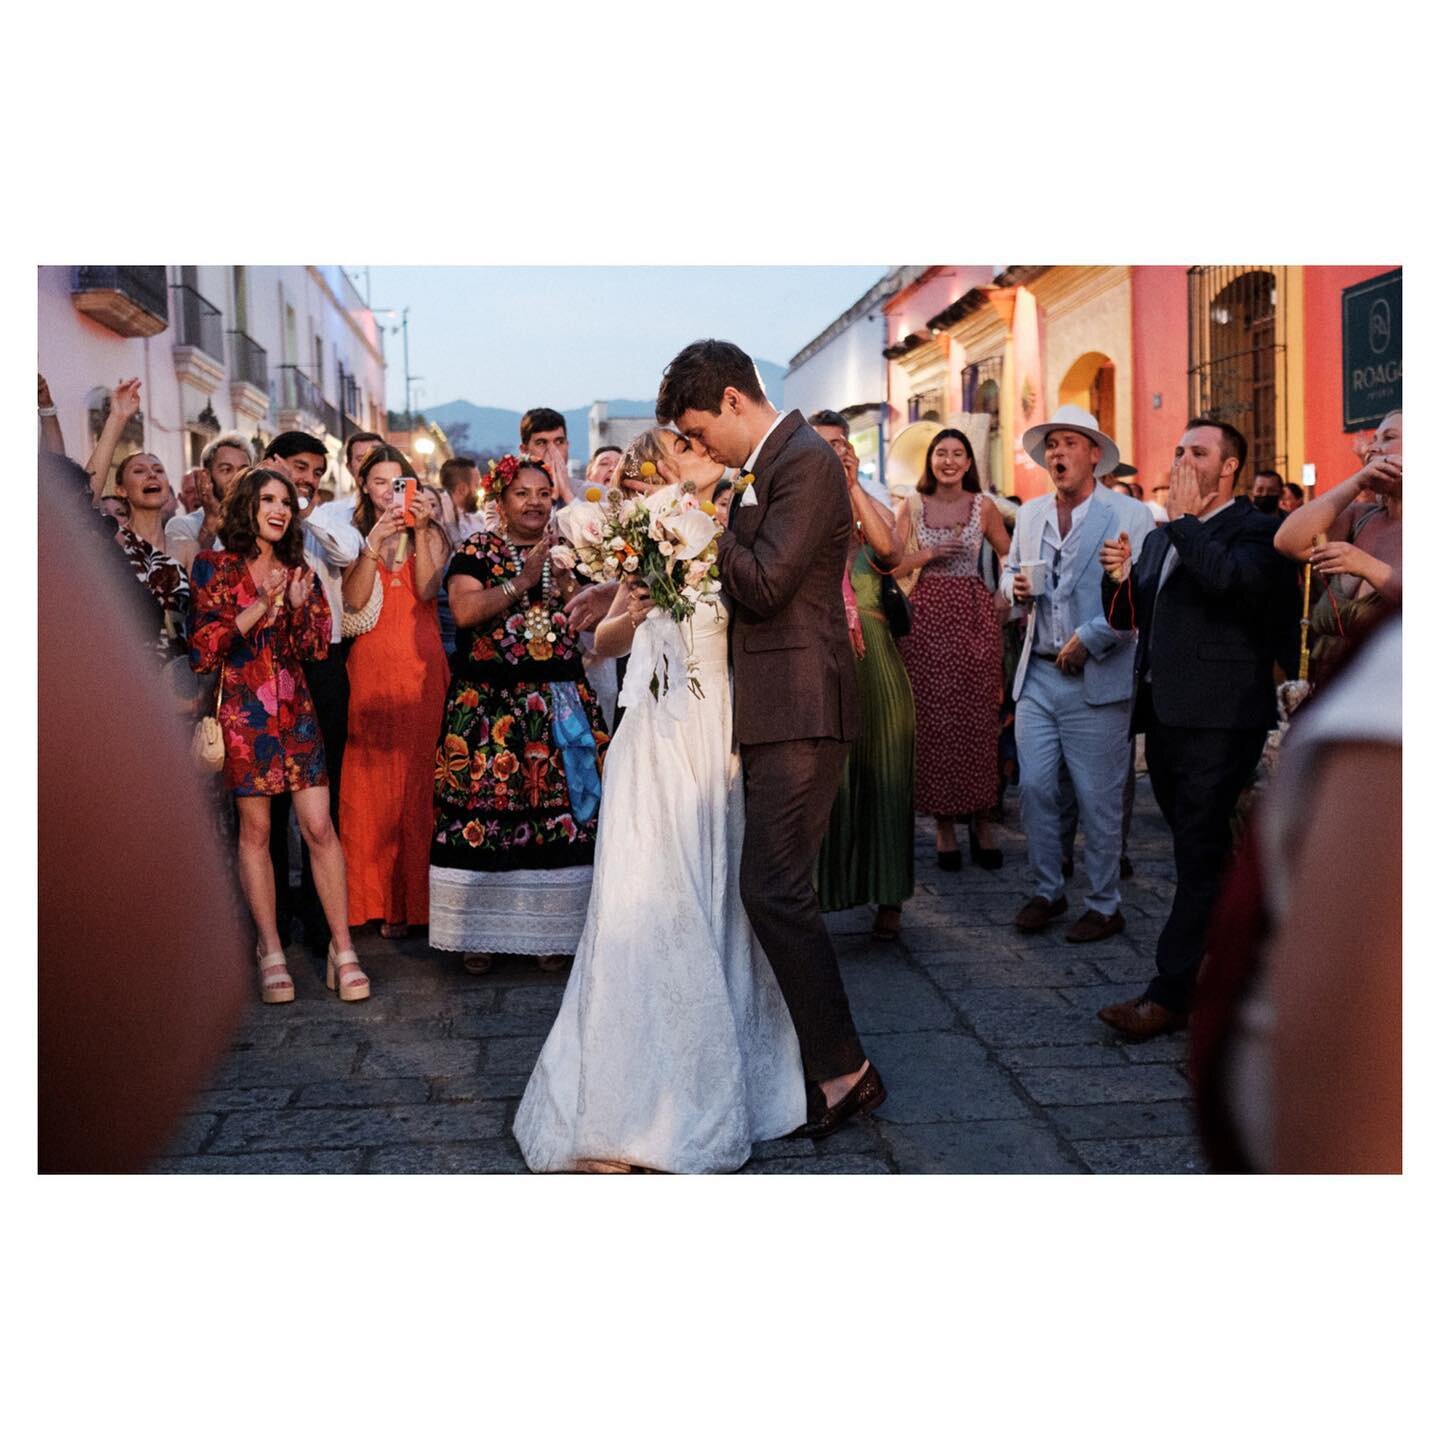 Sarah &amp; Emory in the streets of Oaxaca #lifeatweddings
&bull;
&bull;
Wedding Planner @robertosantiagoexperiences
&bull;
&bull;
#oaxacaweddingphotographer #oaxacadestinationwedding
#mexicoweddingphotographer
#oaxacawedding
#weddingphotographer
#we